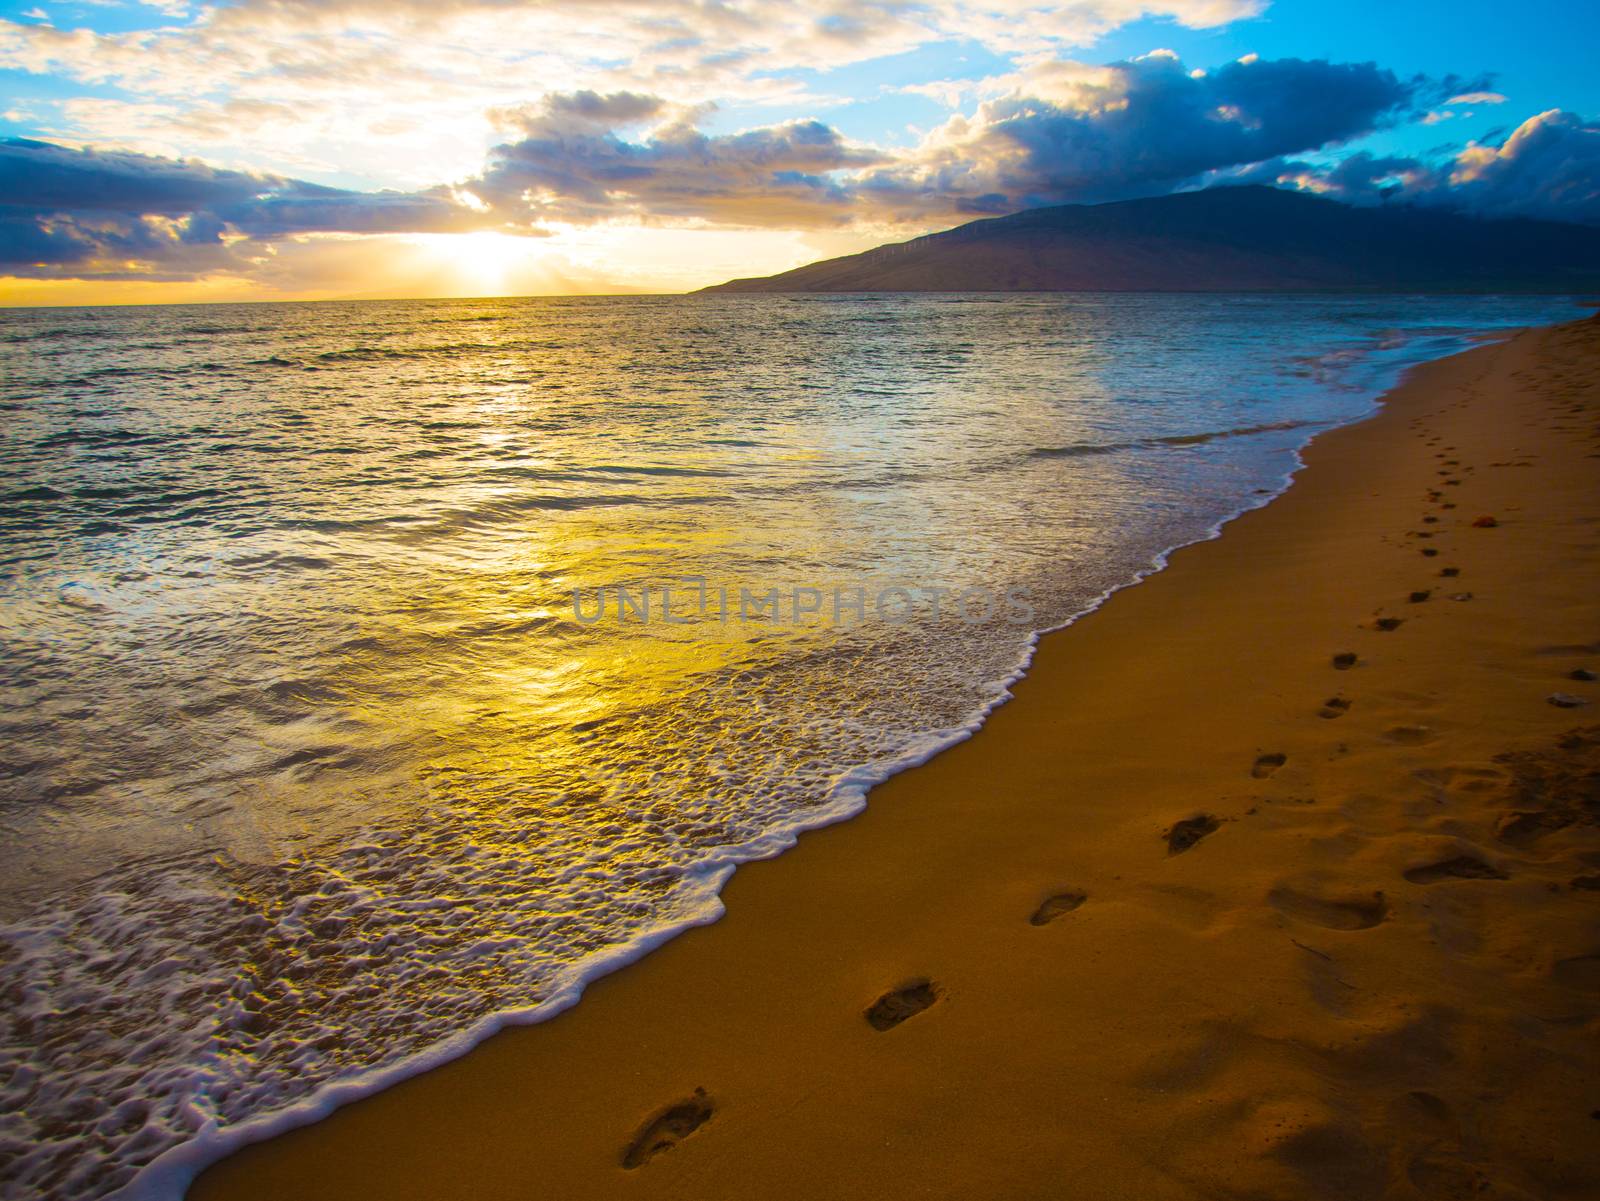 Footprints along beautiful beach on Maui in Hawaii